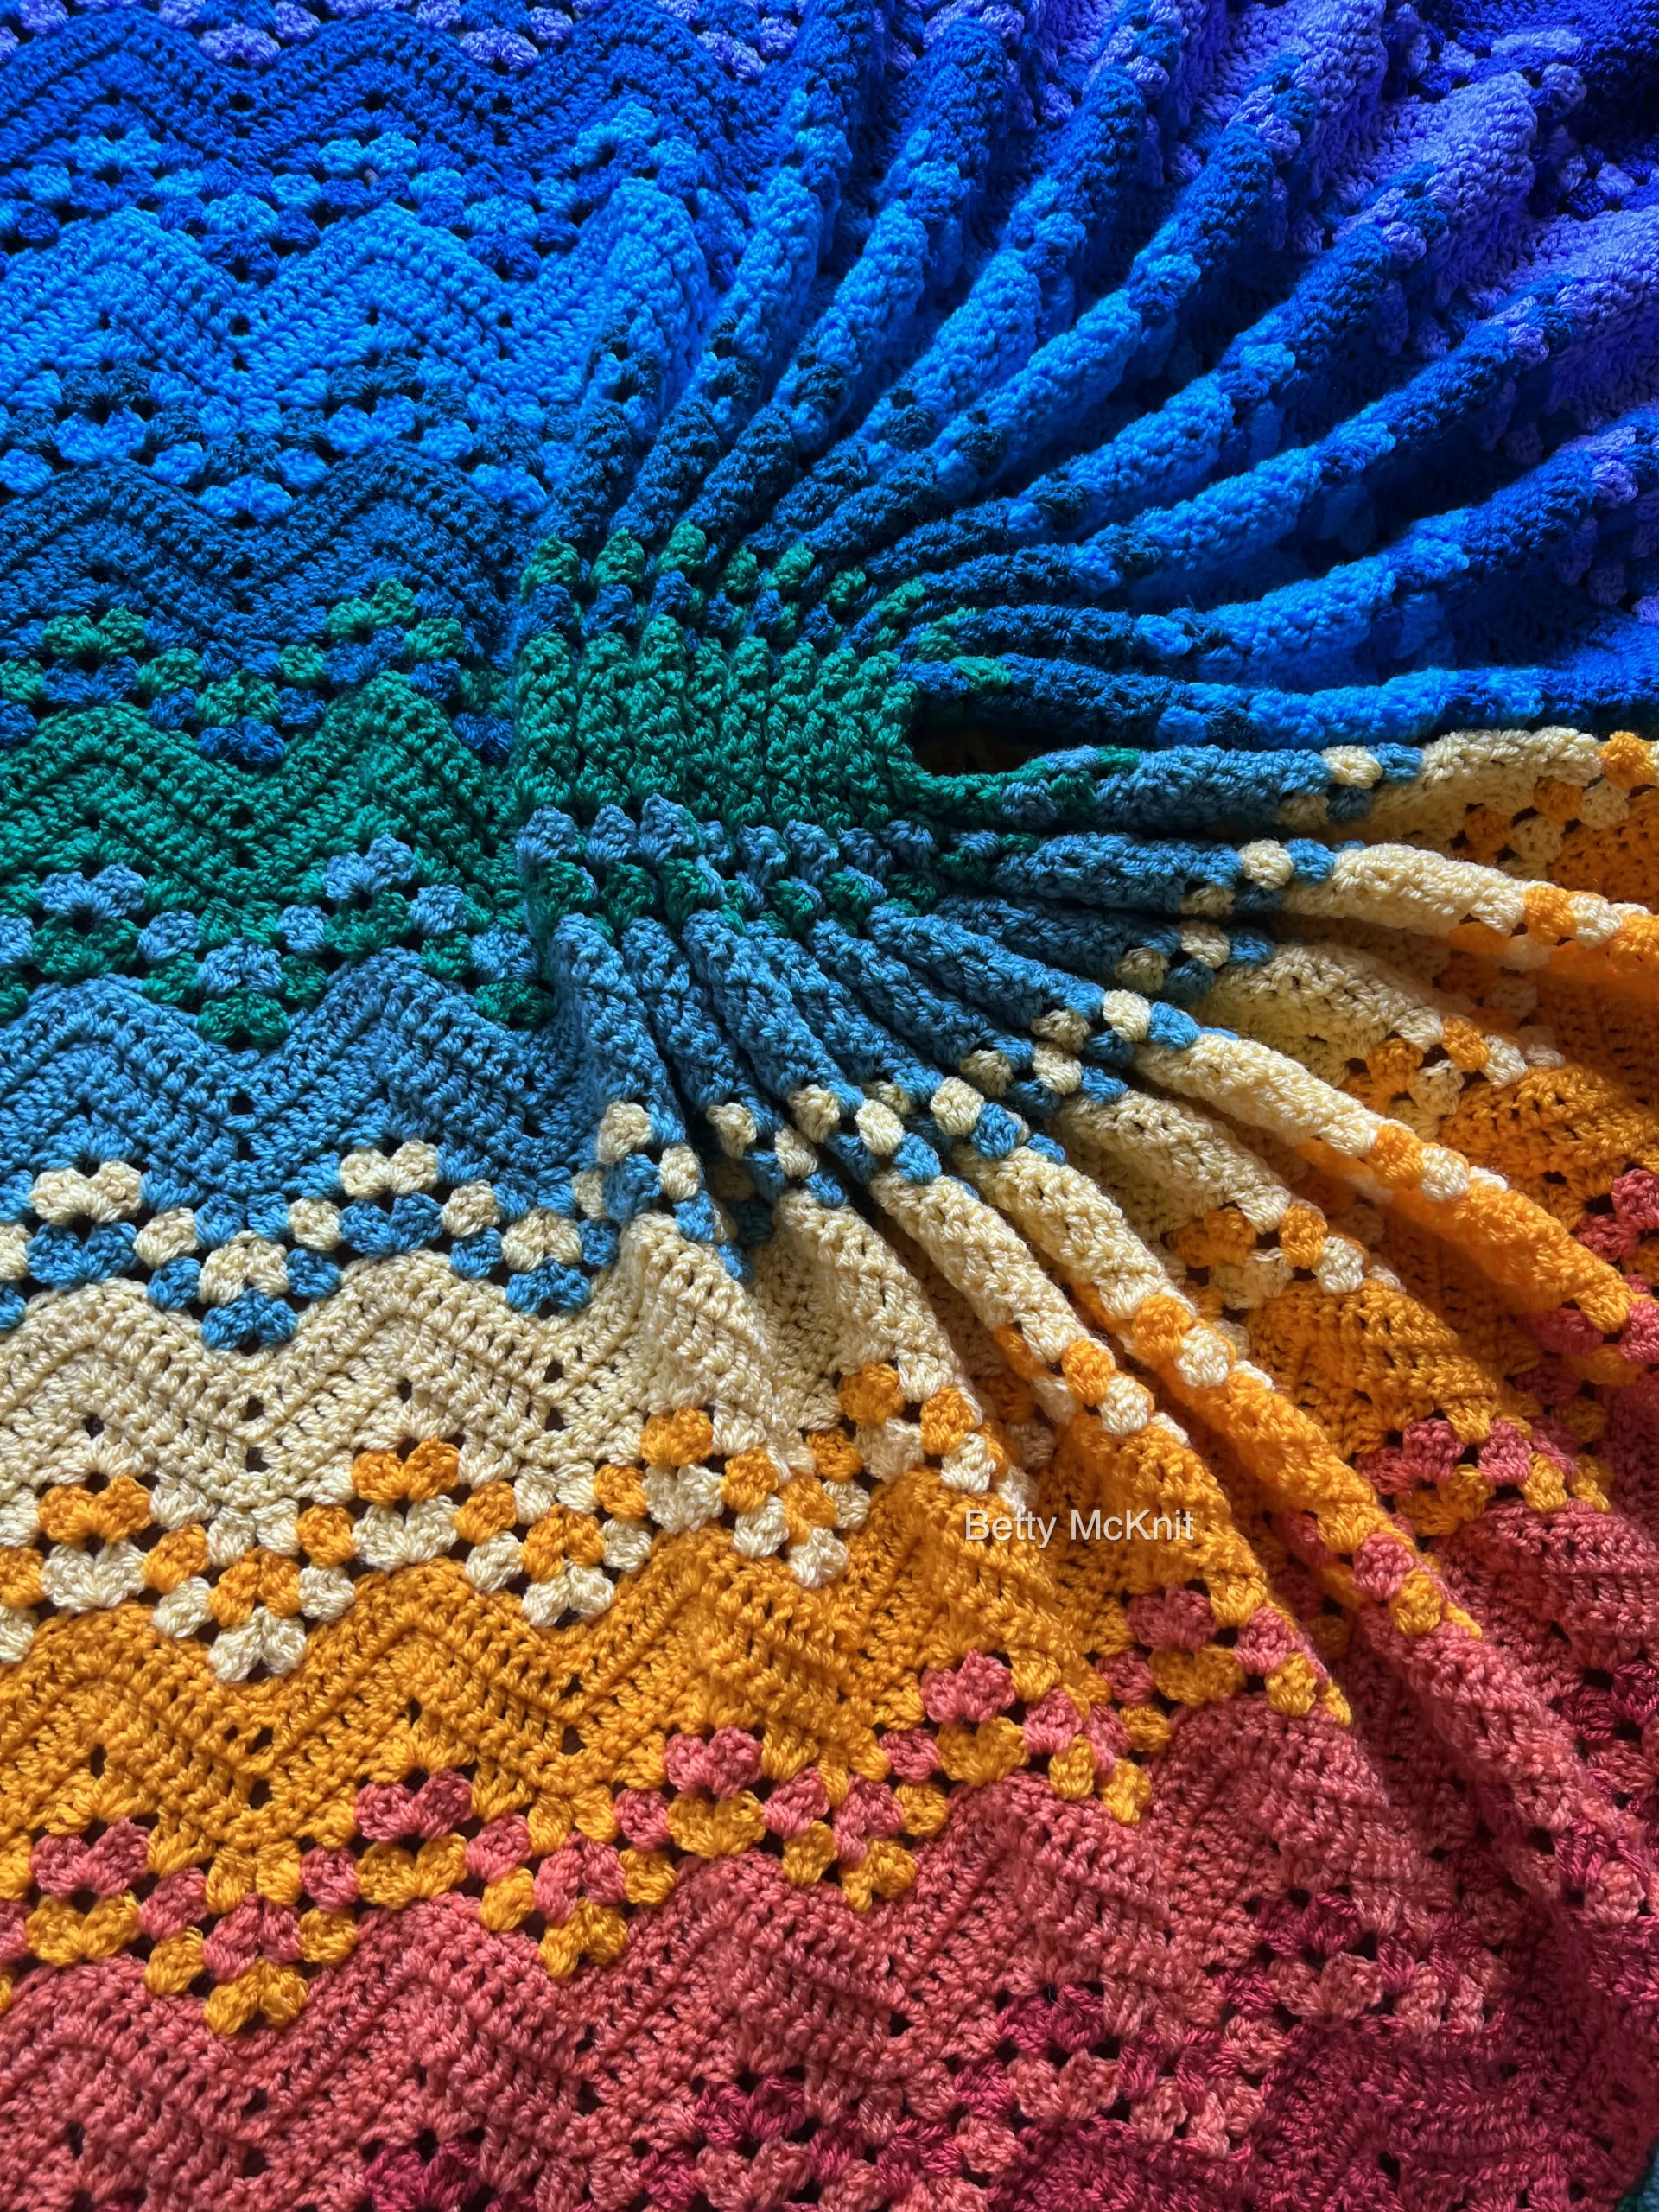 Handmade Crocheted Rainbow Baby Blanket Lap Blanket Square